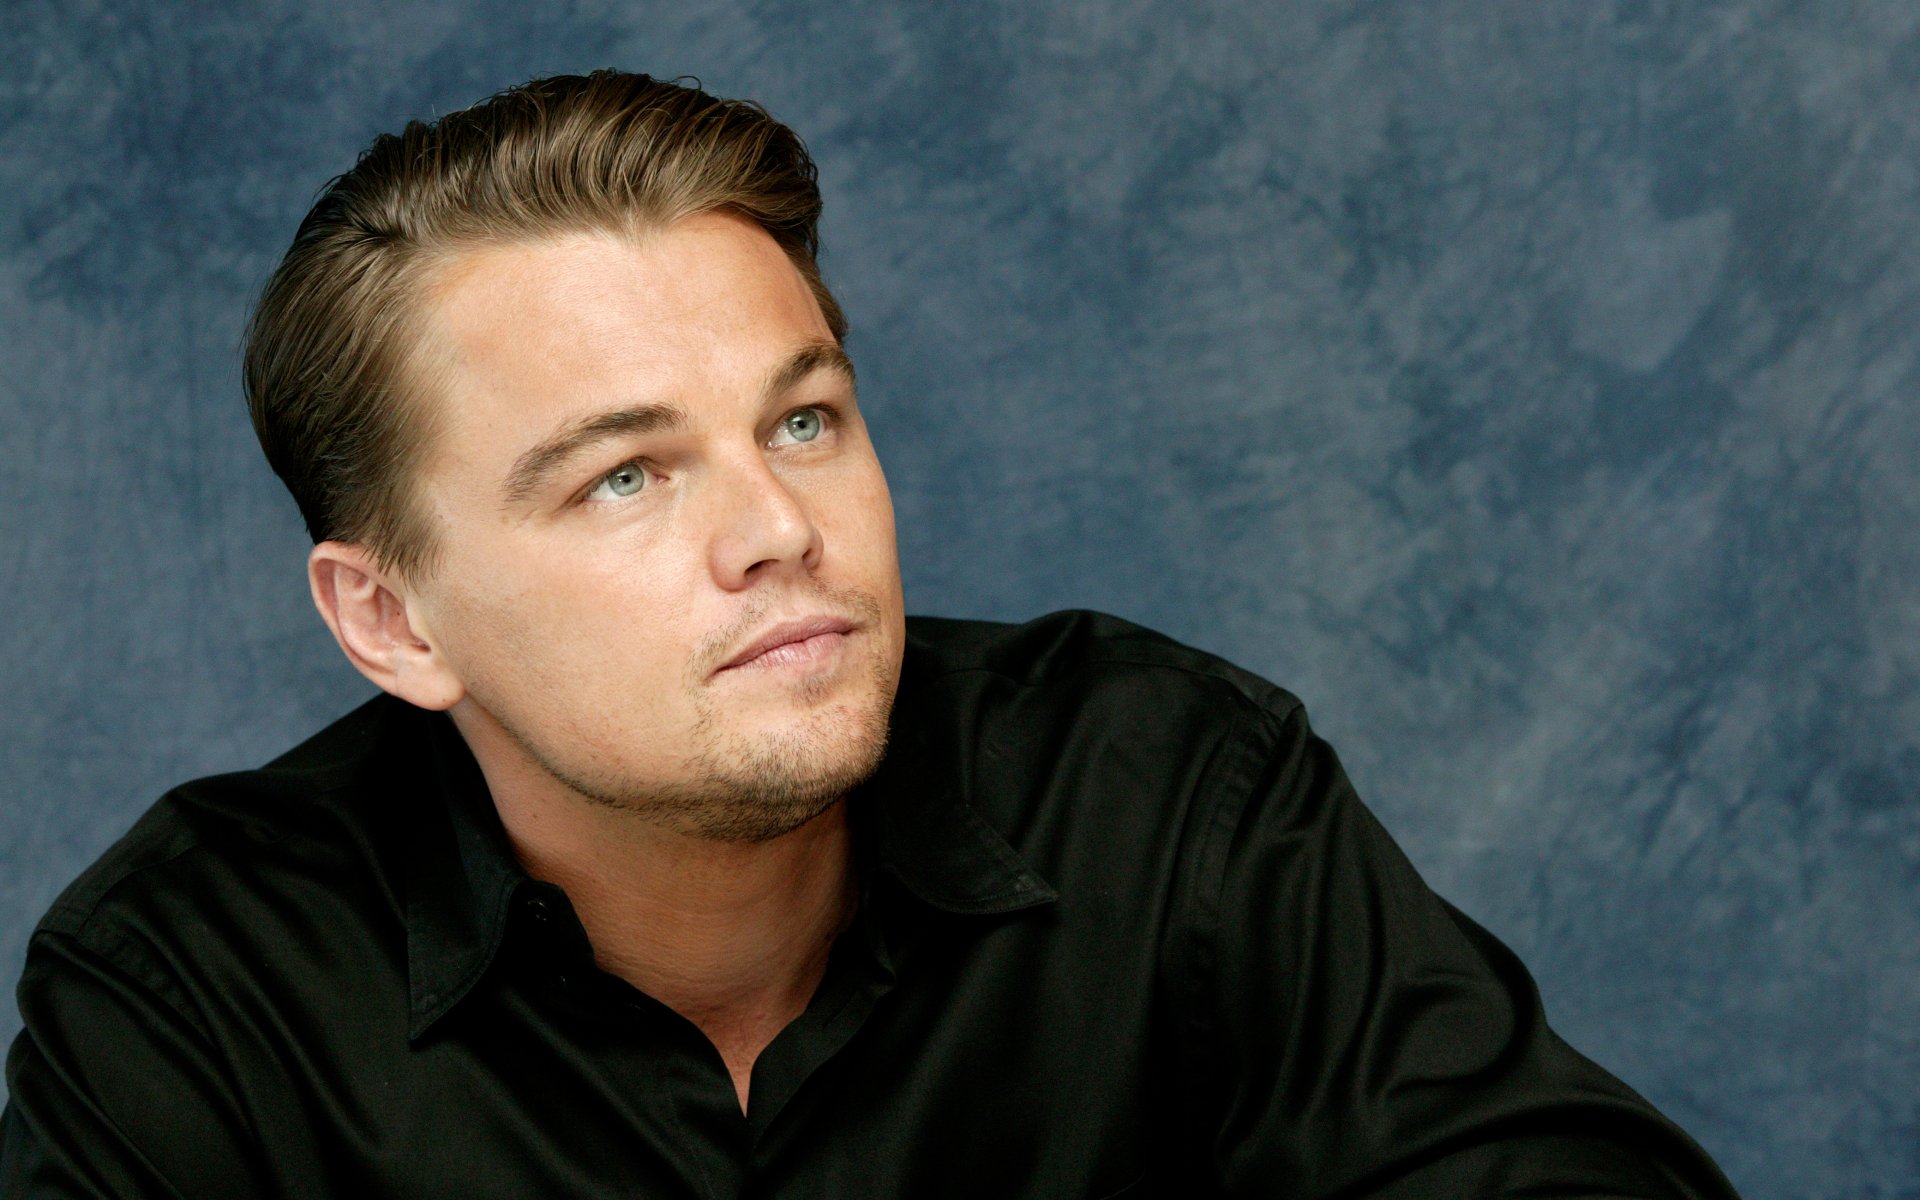 Download American Actor Celebrity Leonardo Dicaprio 4k Ultra Hd Wallpaper 